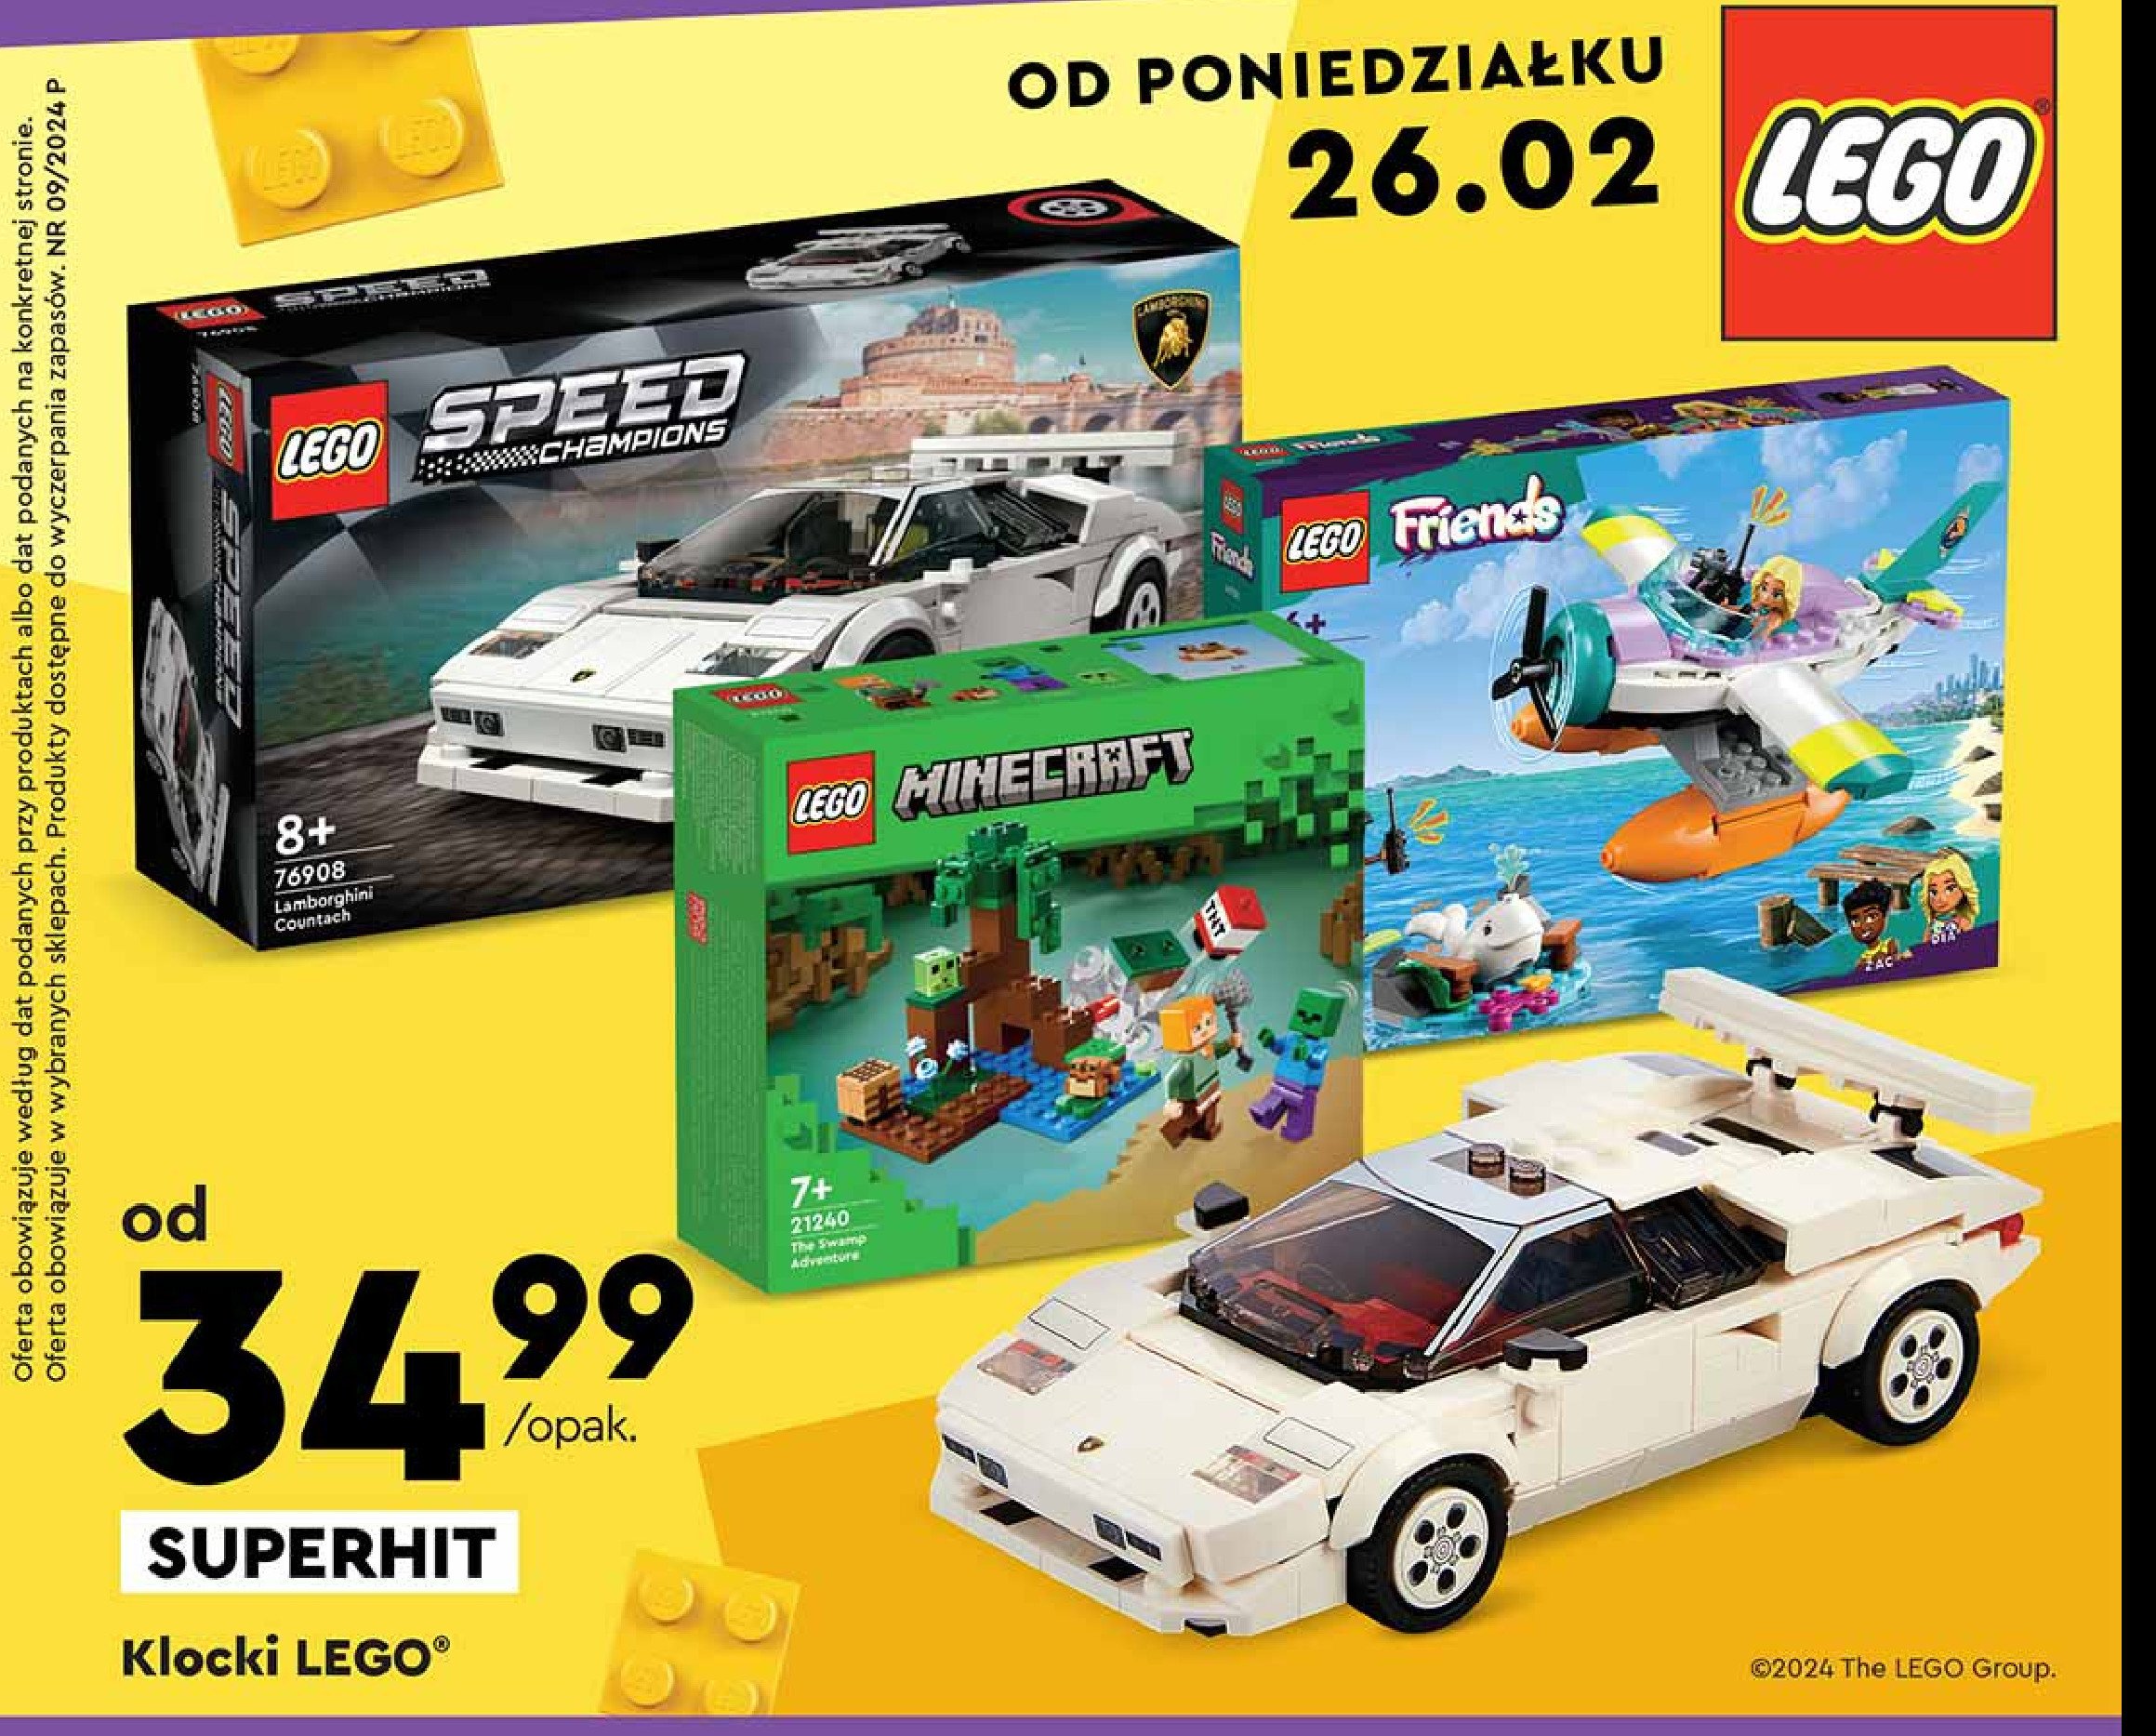 Klocki 76908 Lego speed champions promocja